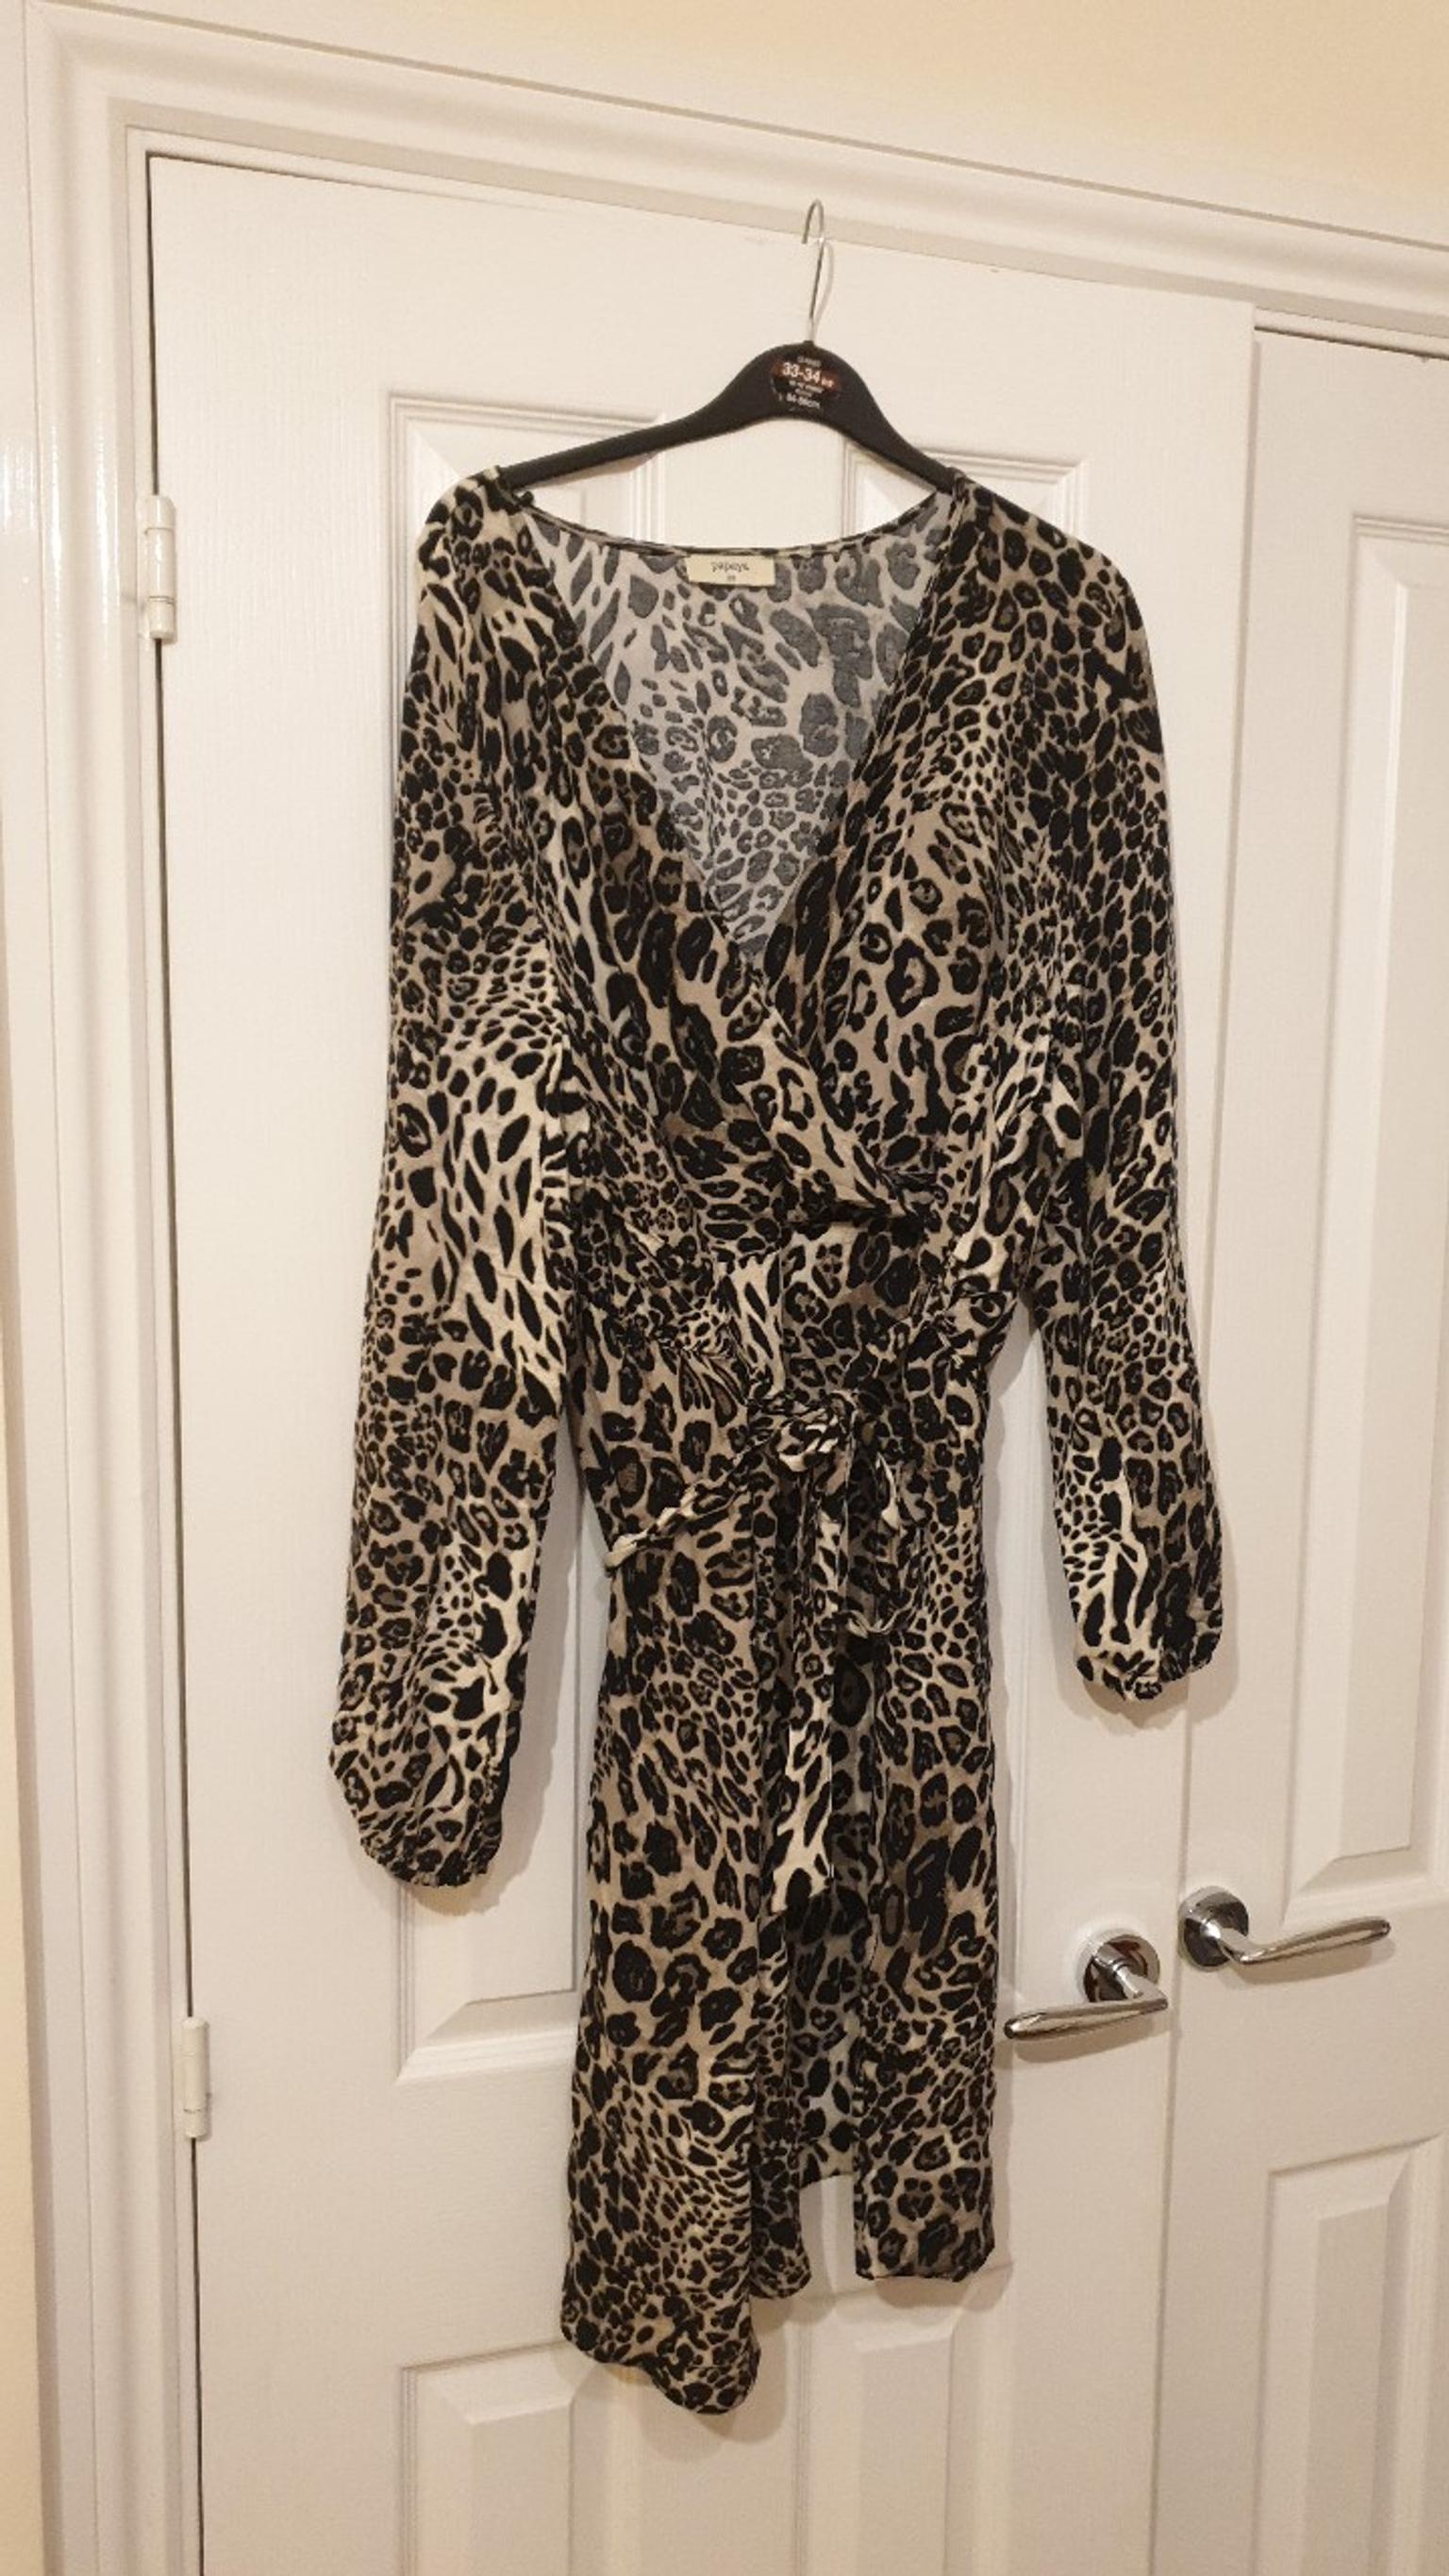 leopard print dress matalan